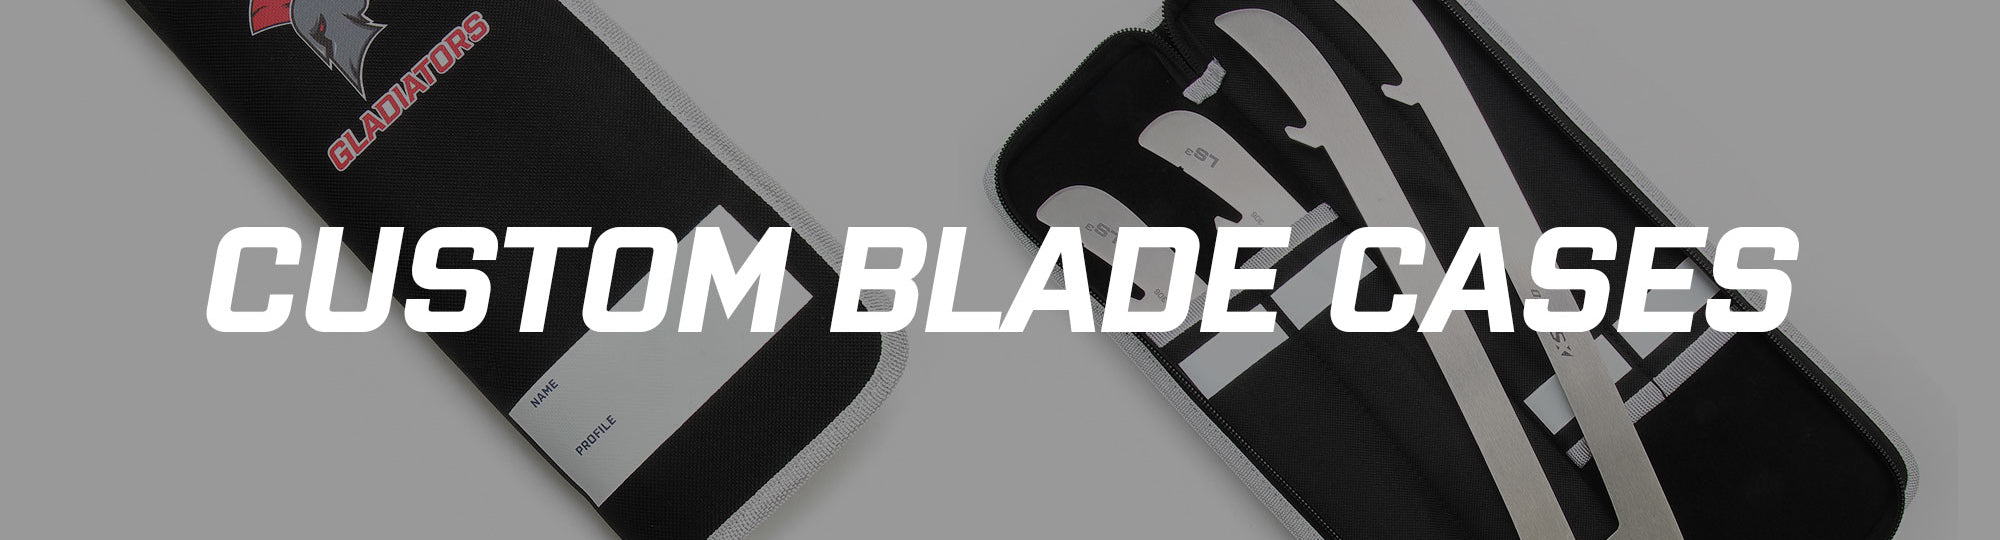 Custom Blade Cases